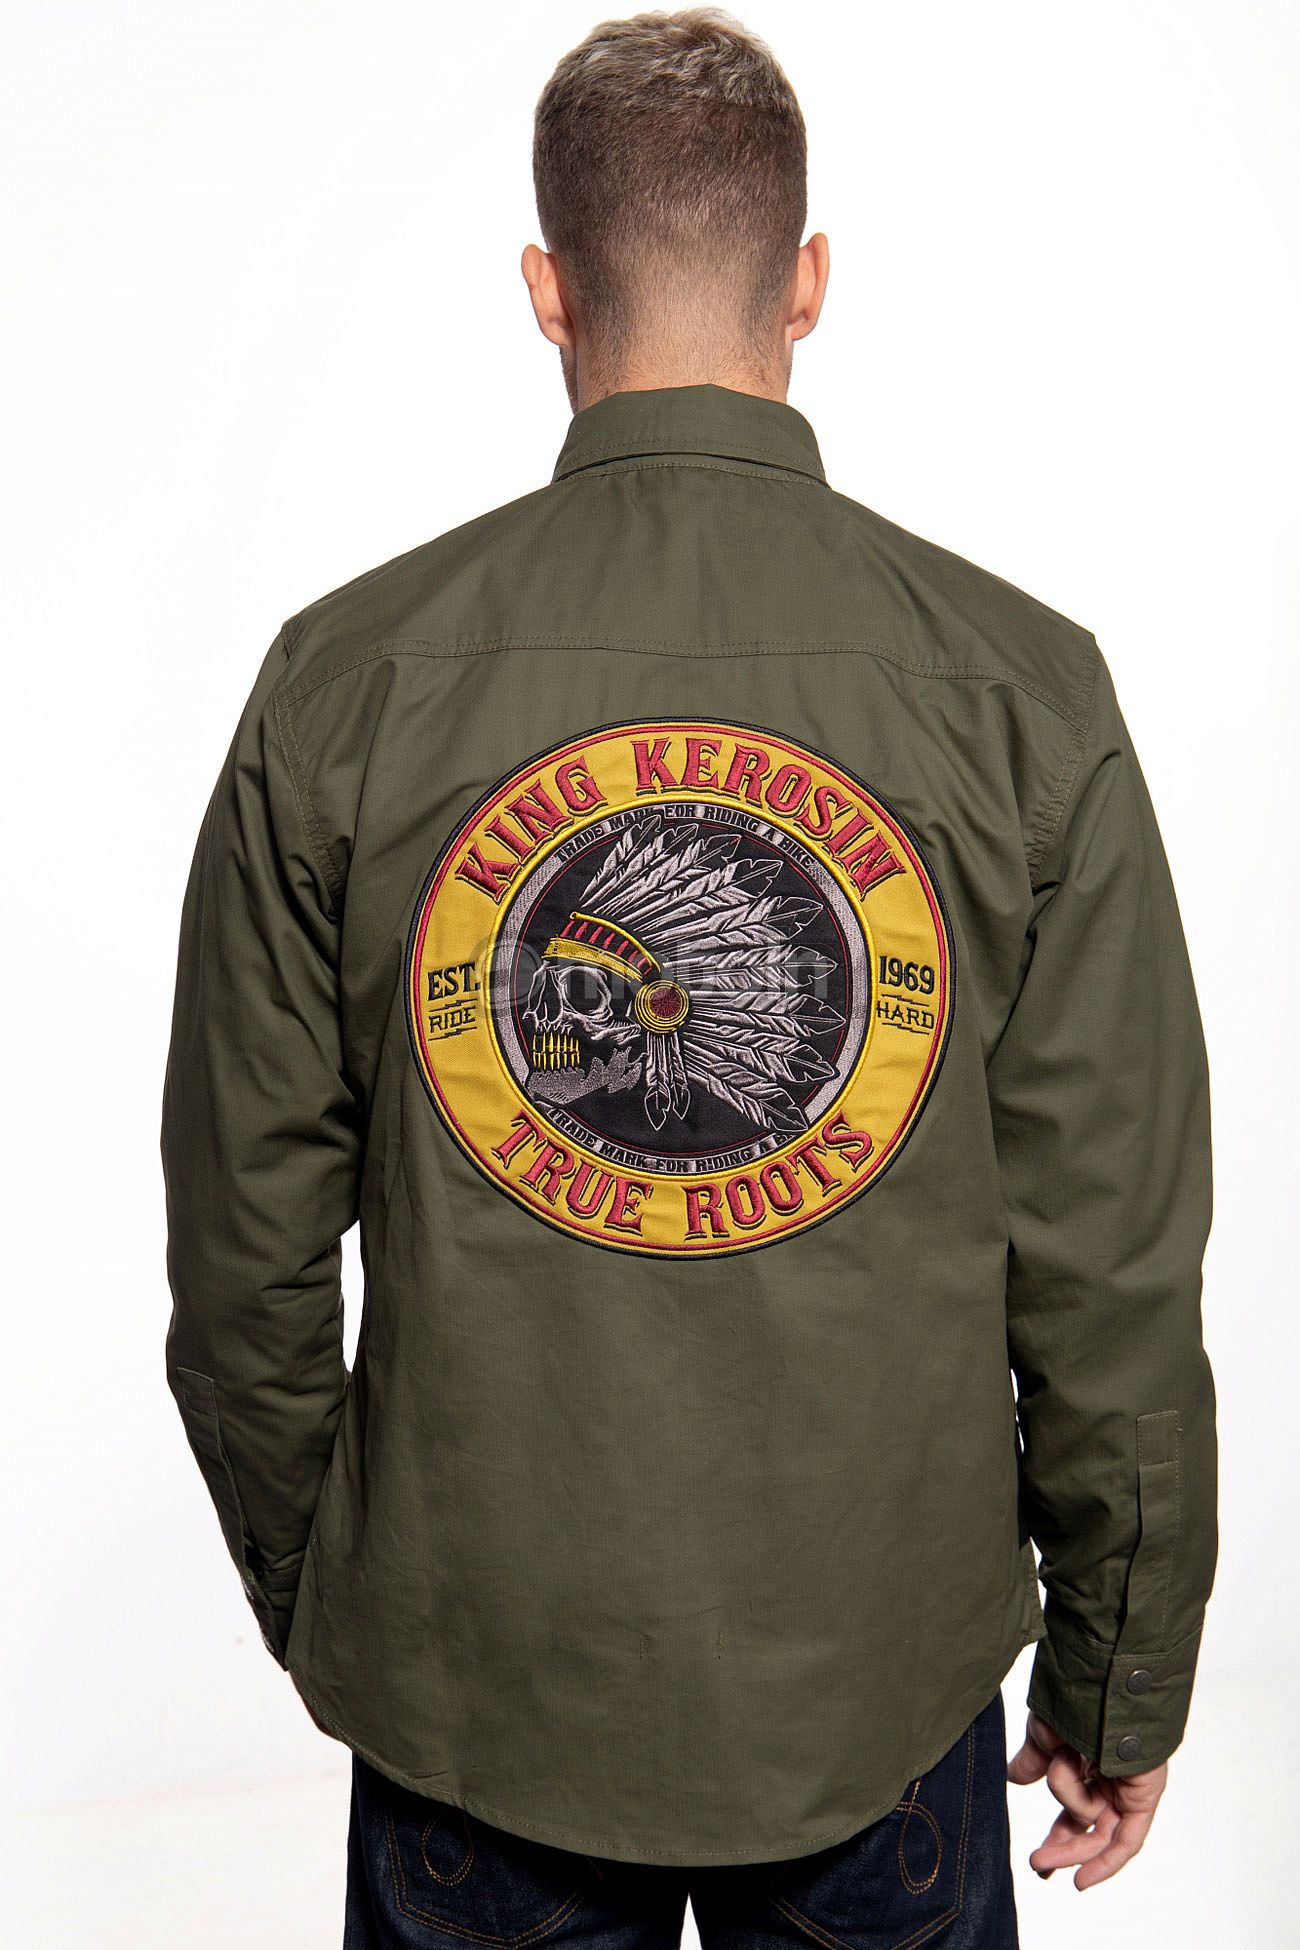 King Kerosin Adventure Gear - Indian Rider, shirt/jacket 